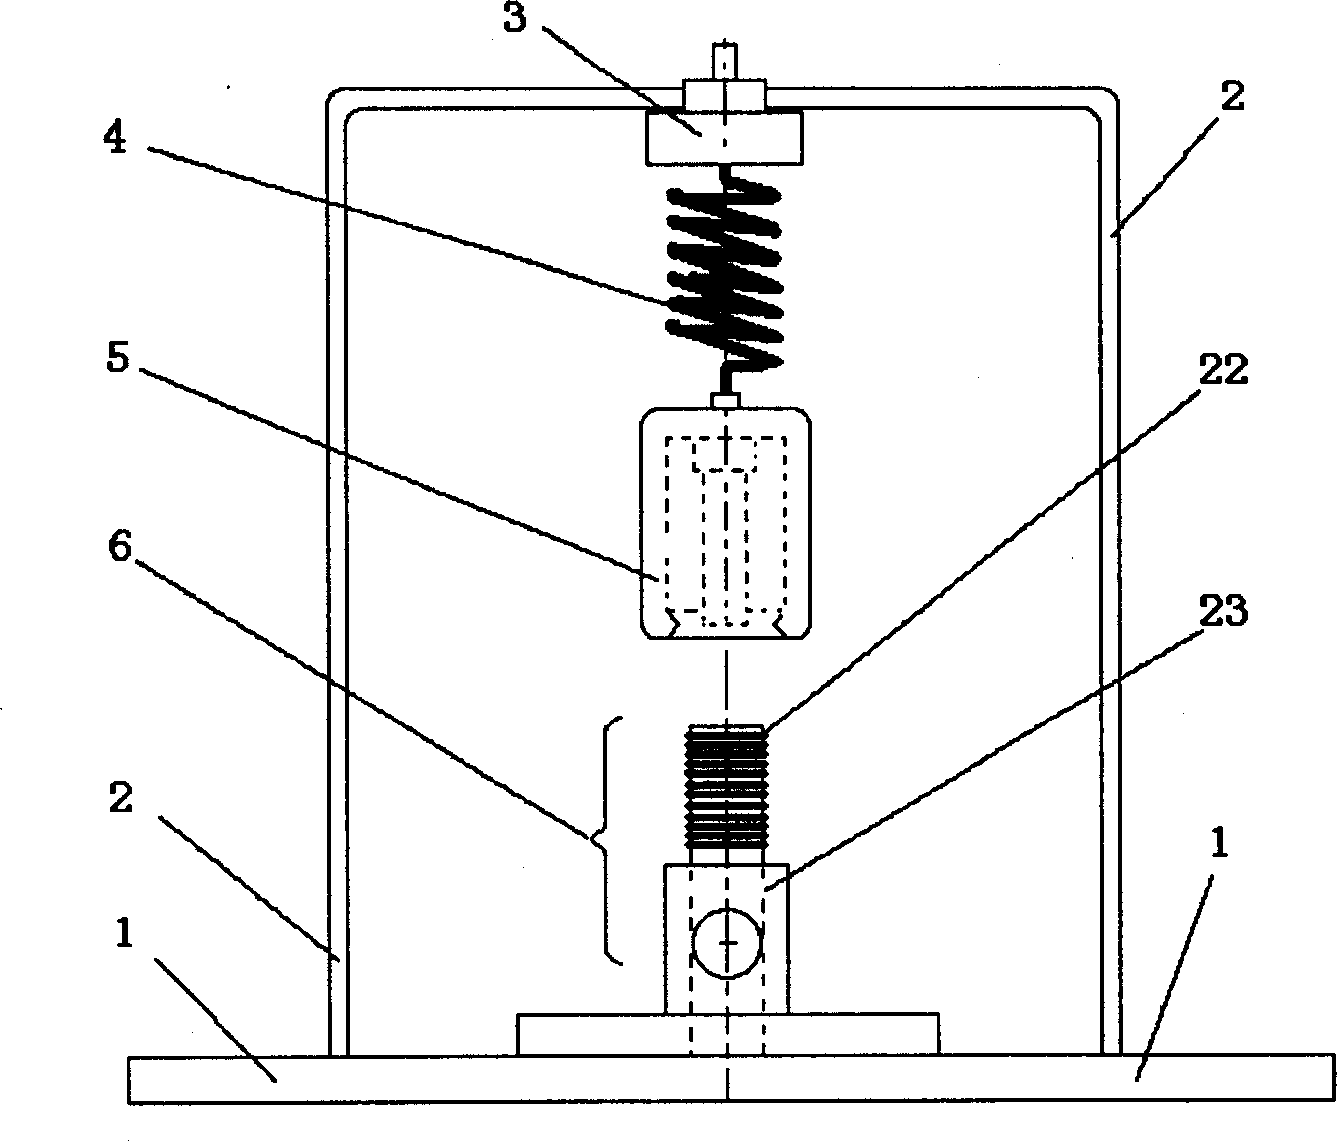 Forced vibration demonstration experiment instrument